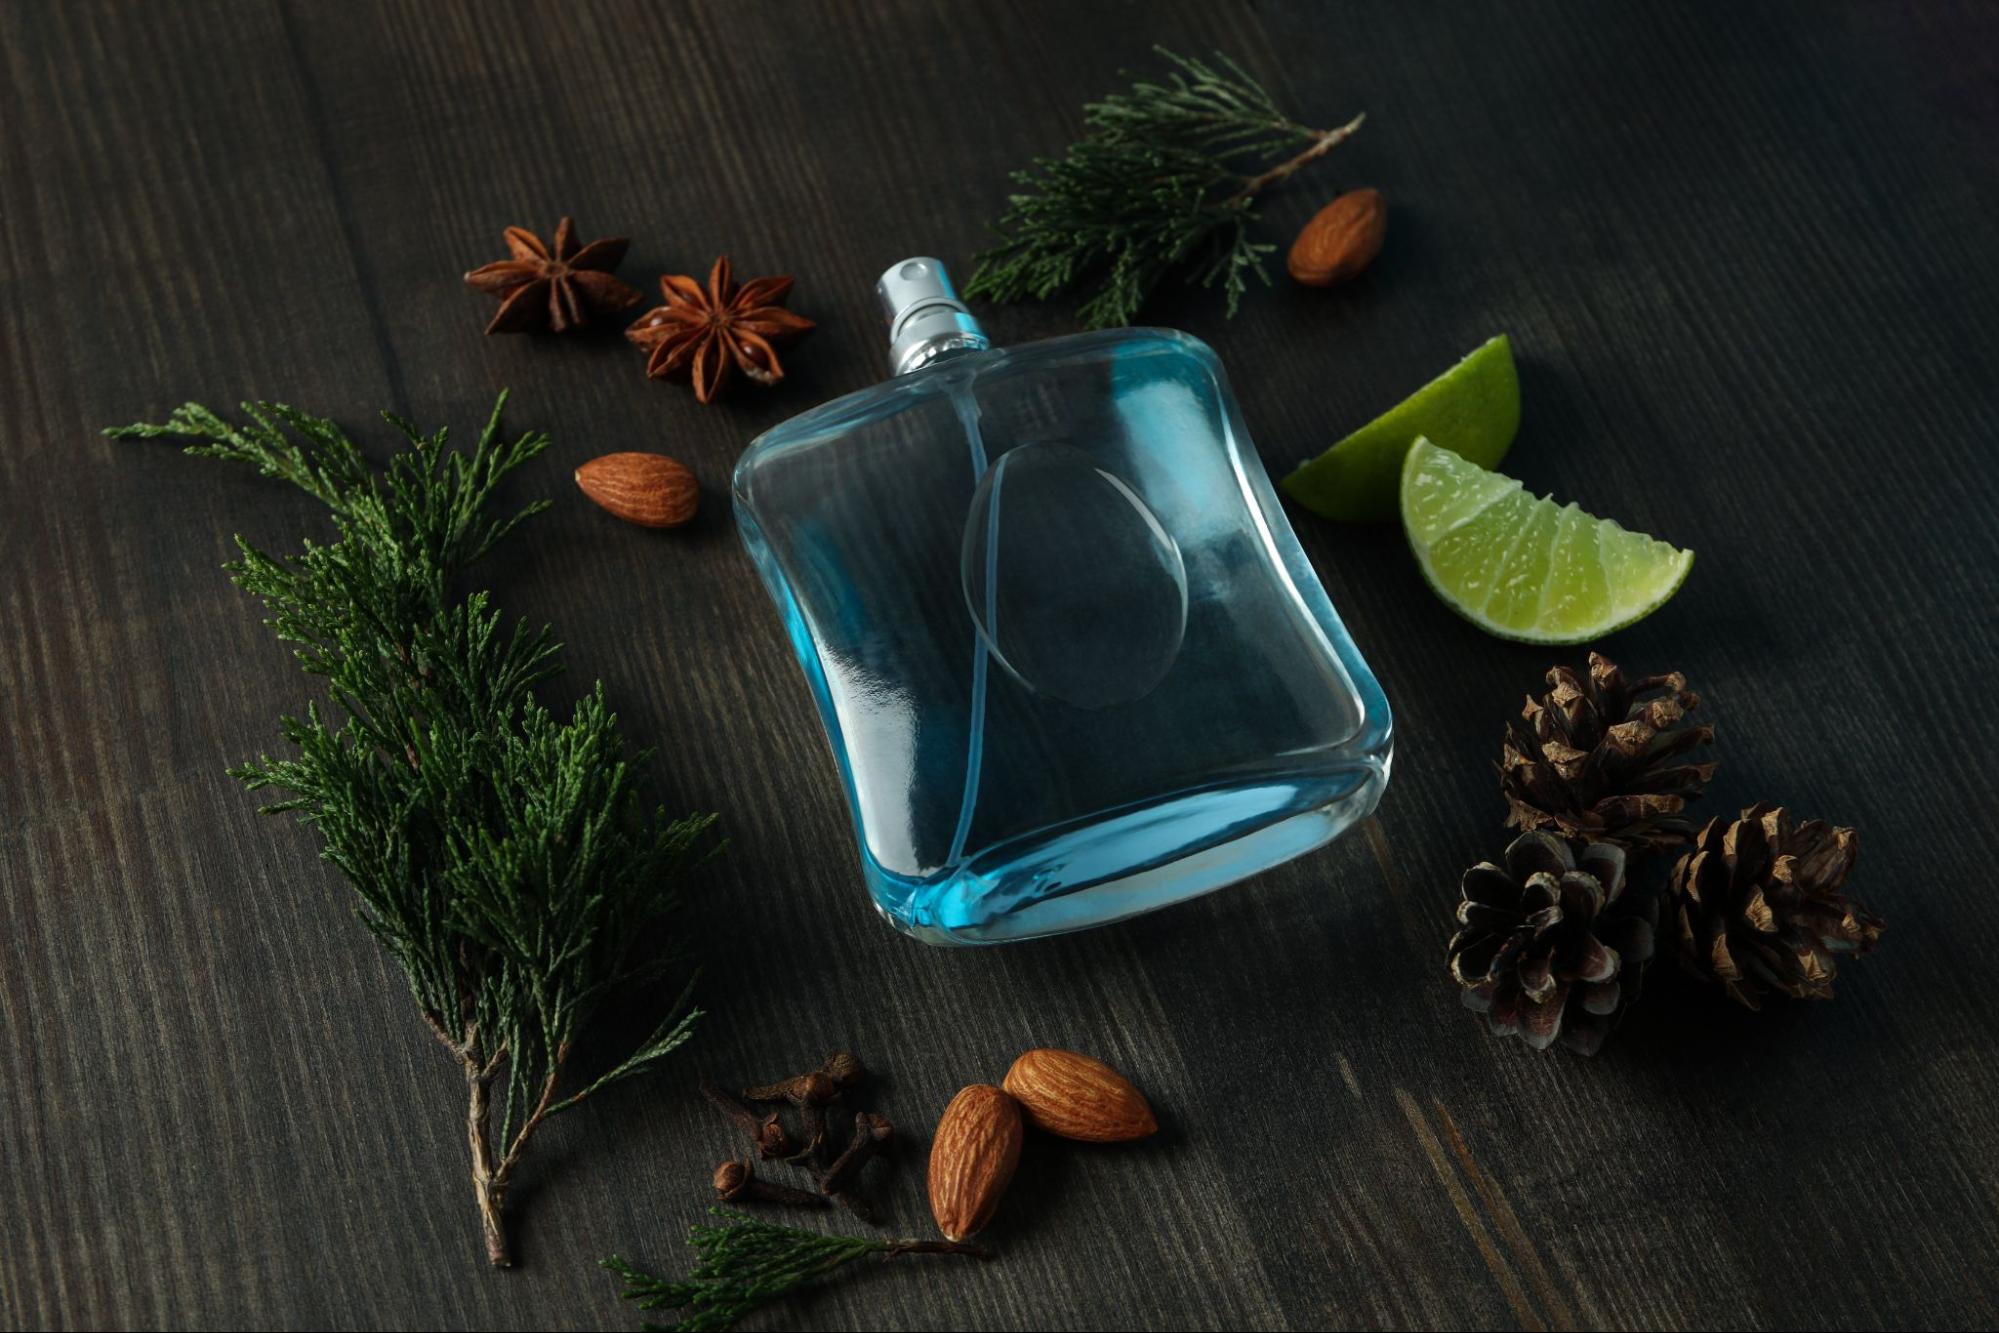 Best Smelling Aquatic Perfumes for Men – Aurel Singapore